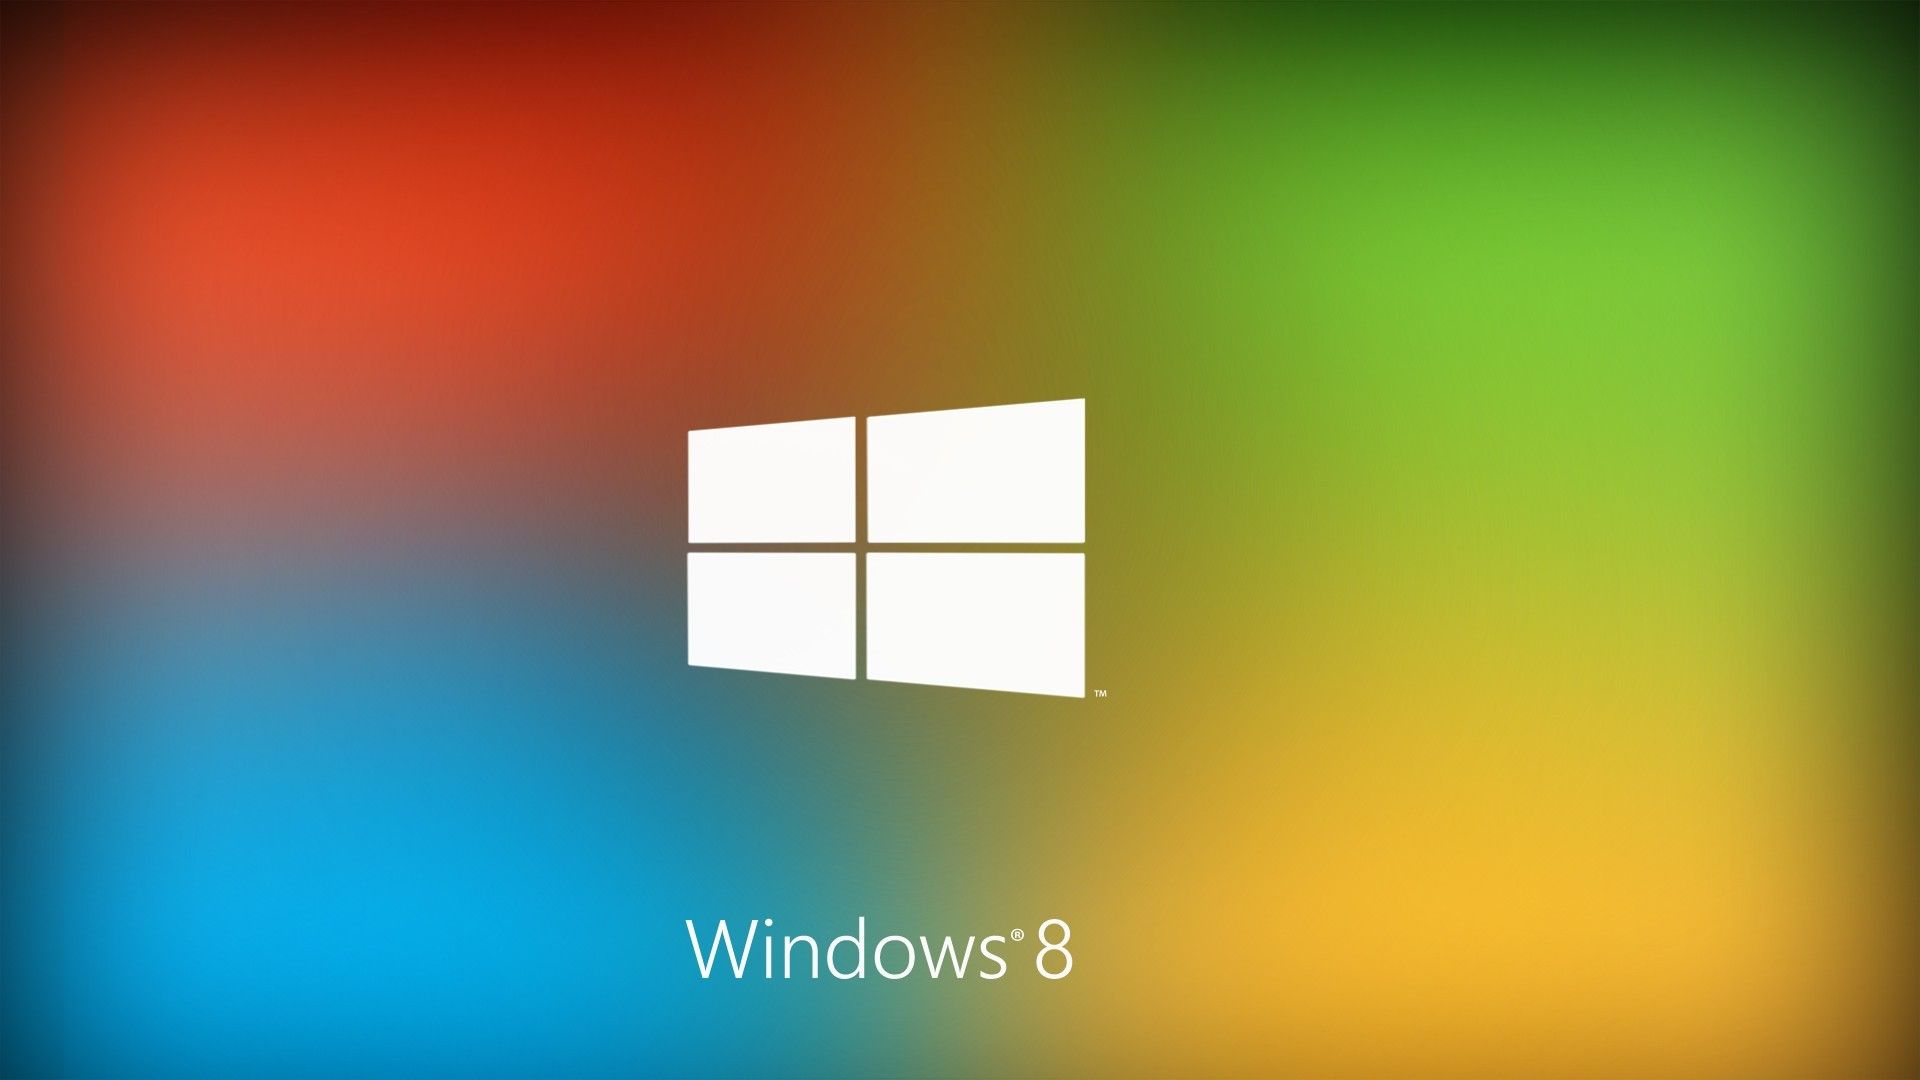 windows 8 wallpaper hd 1080p download -